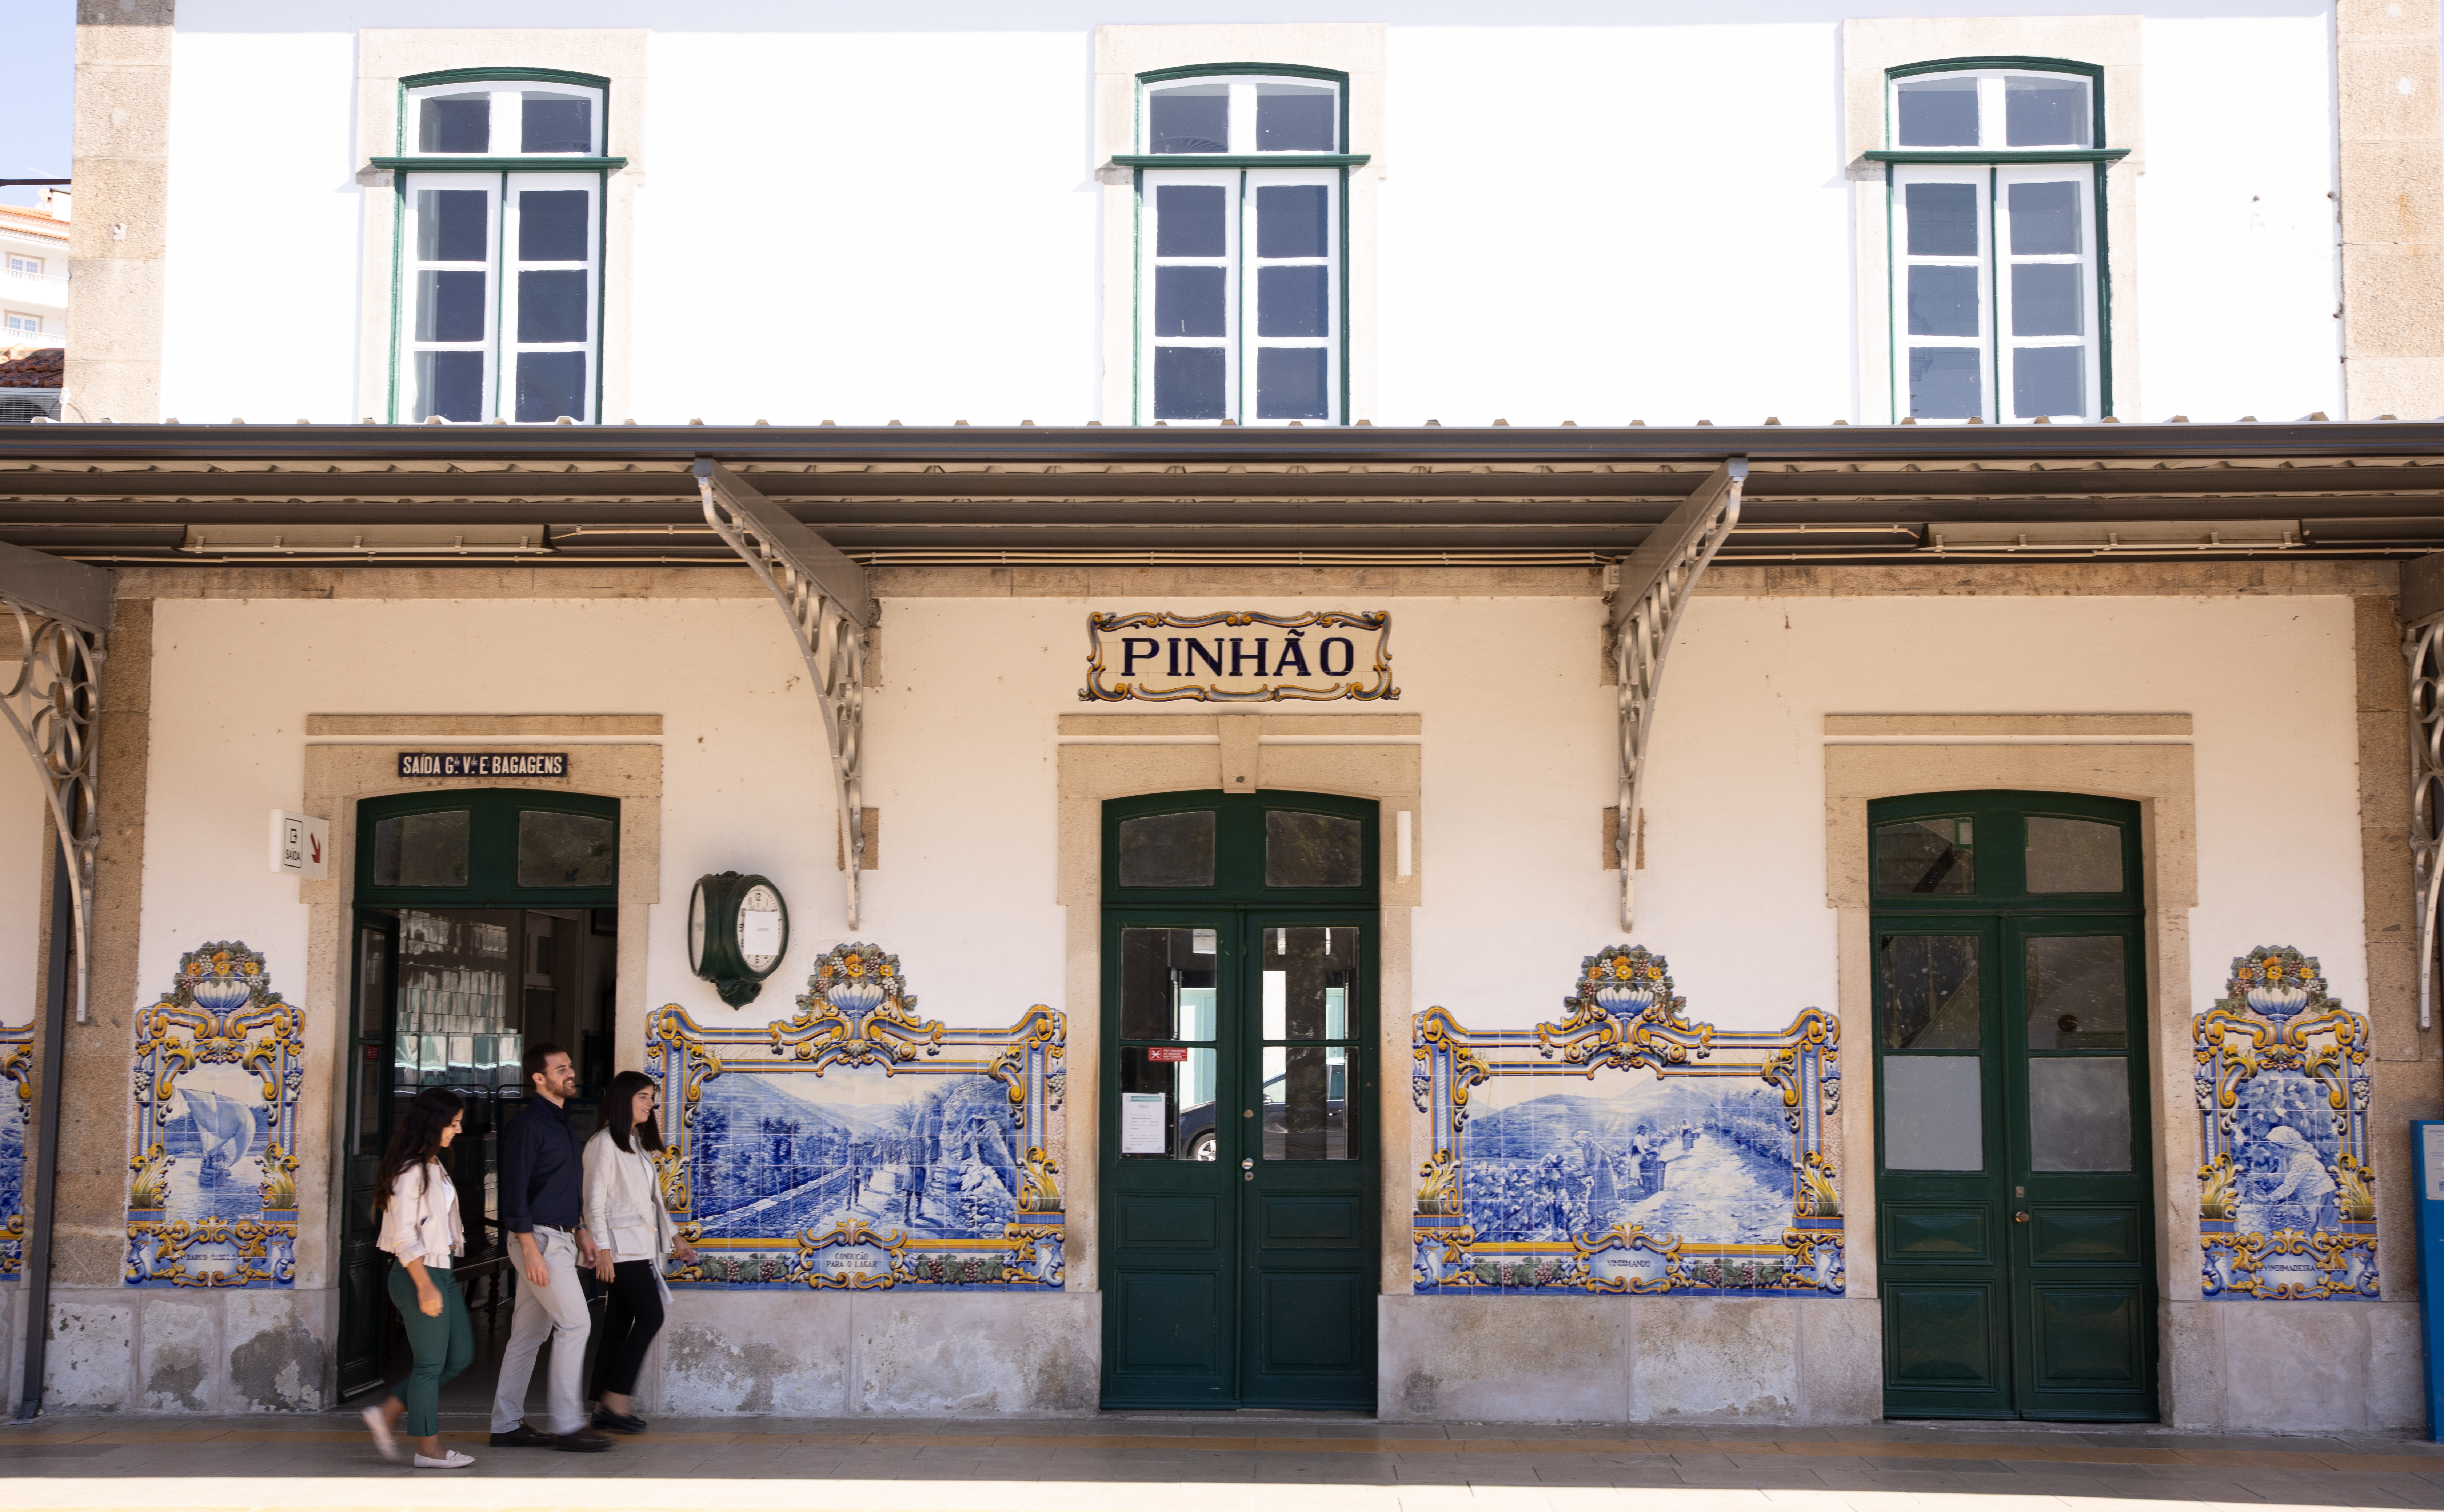 Pinhão train station in the Douro